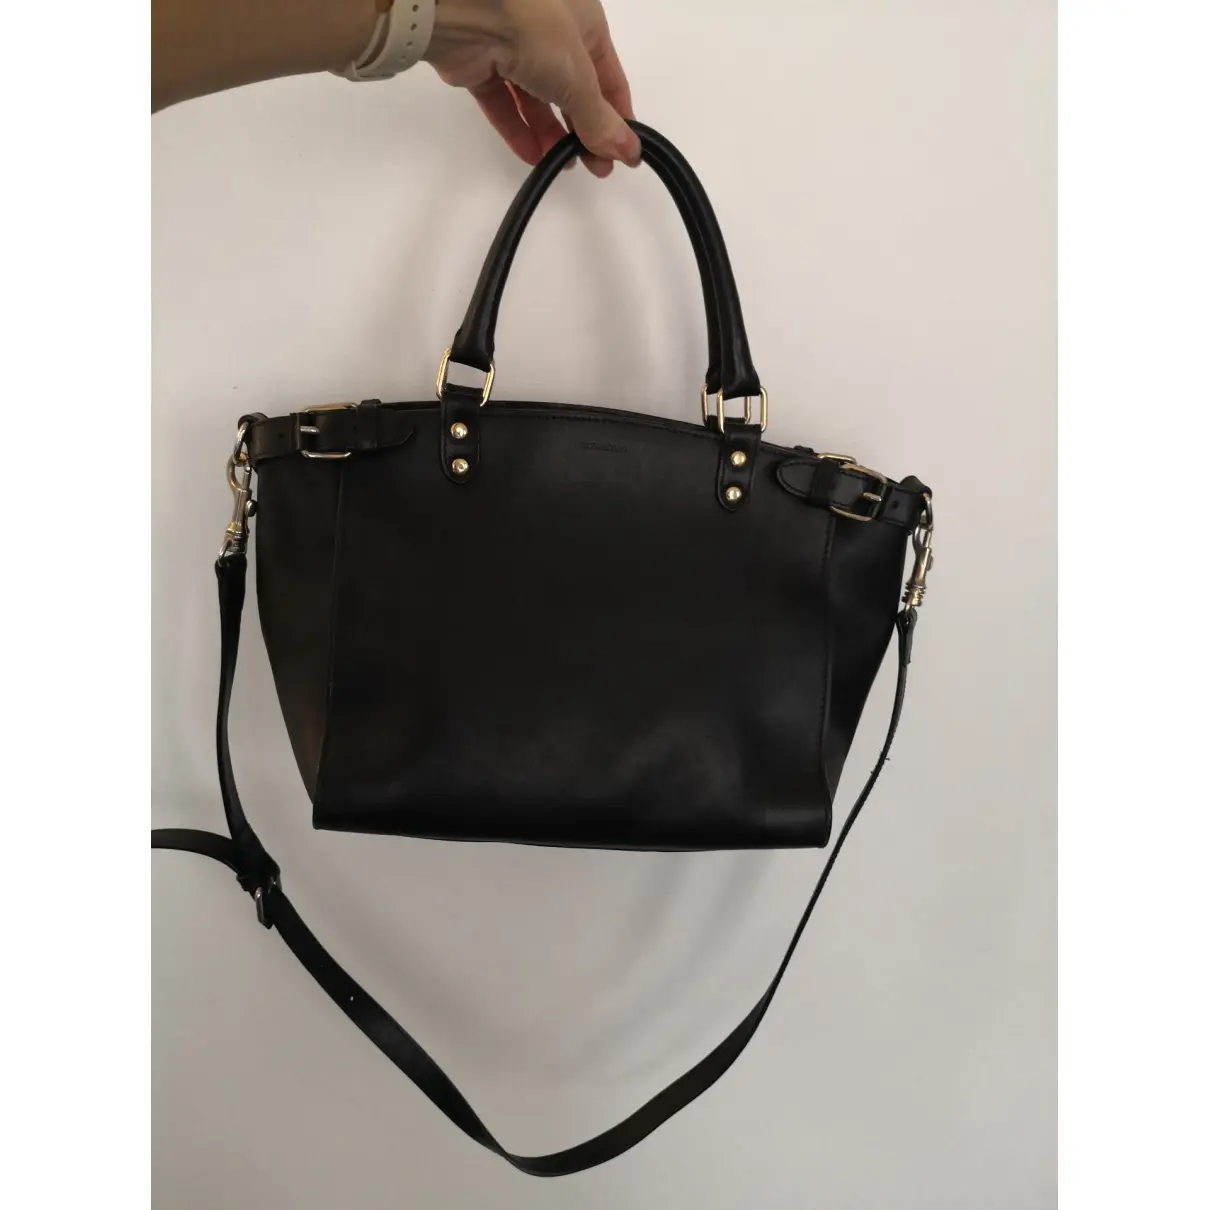 Buy Vanessa Bruno Leather handbag online